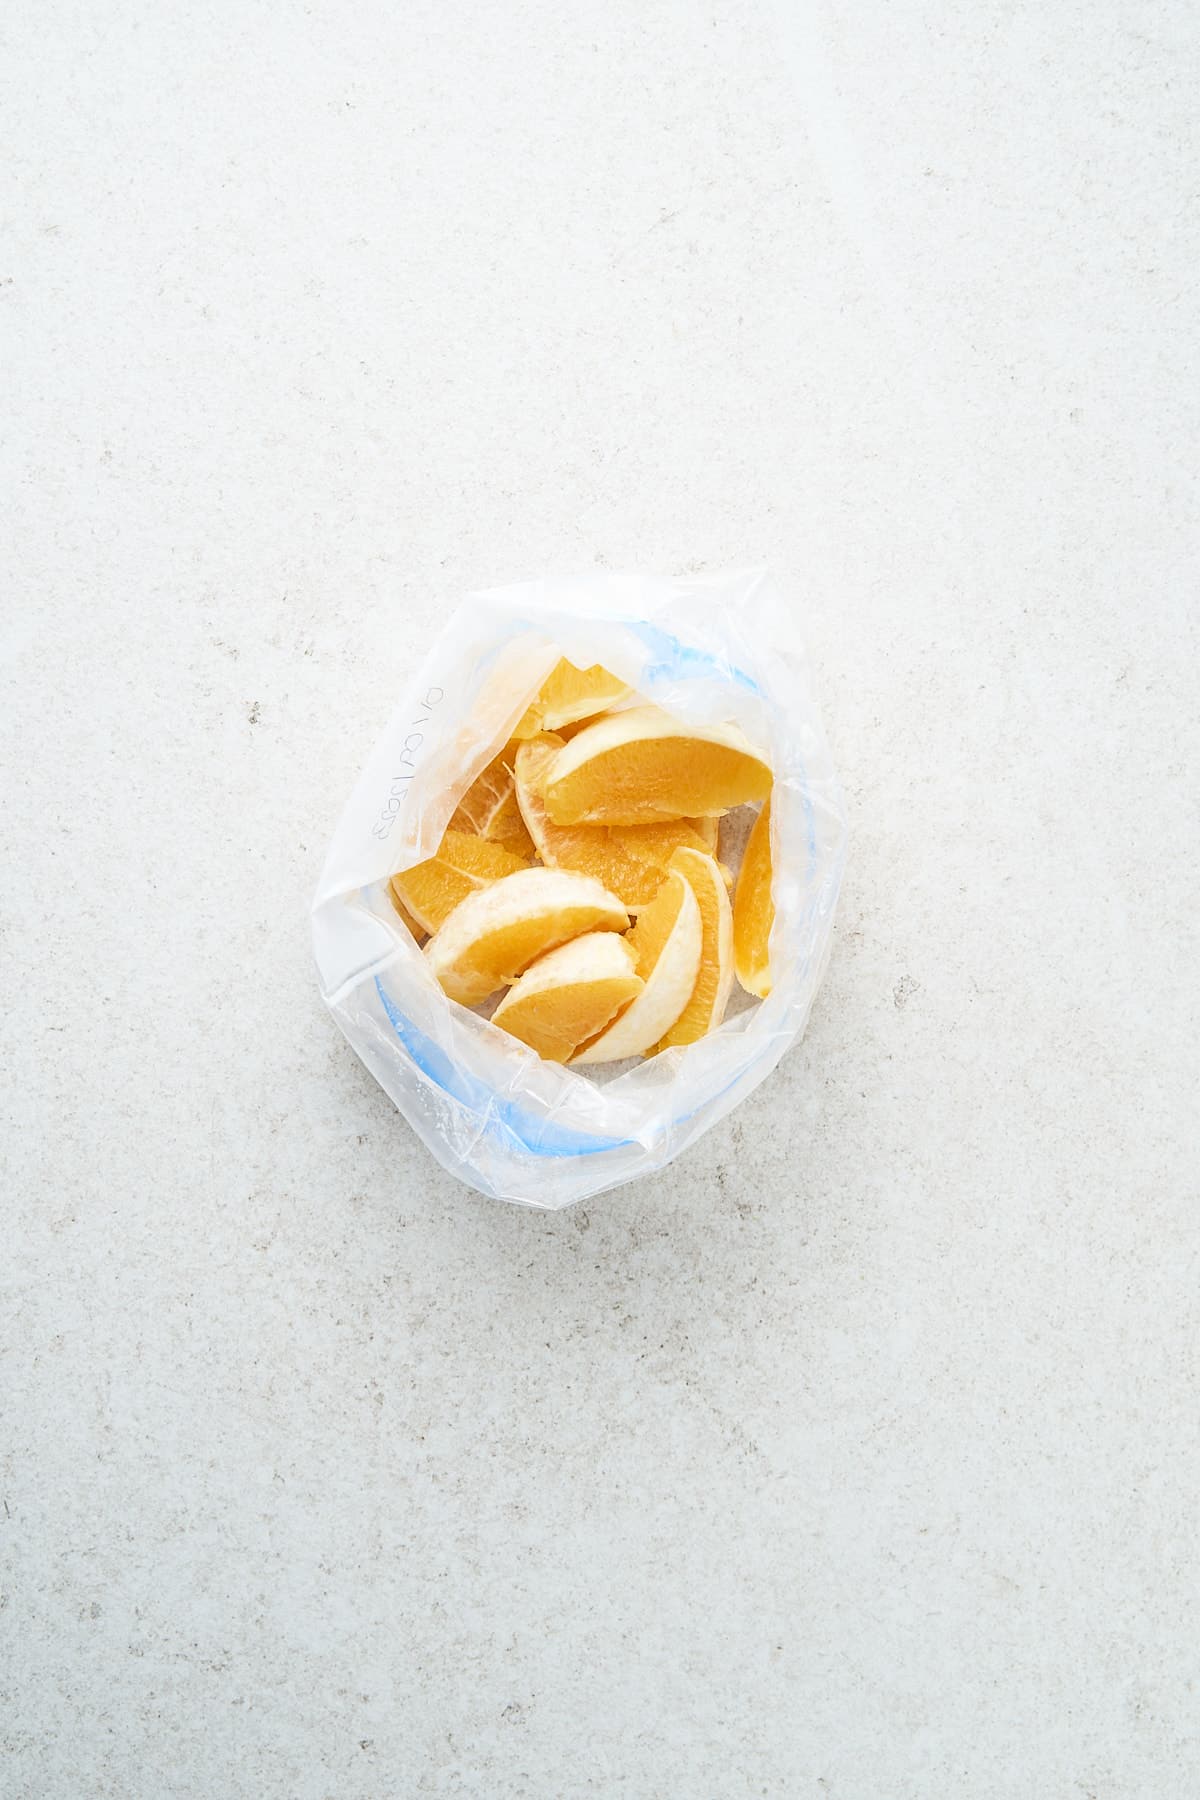 Orange slices in a plastic bag.